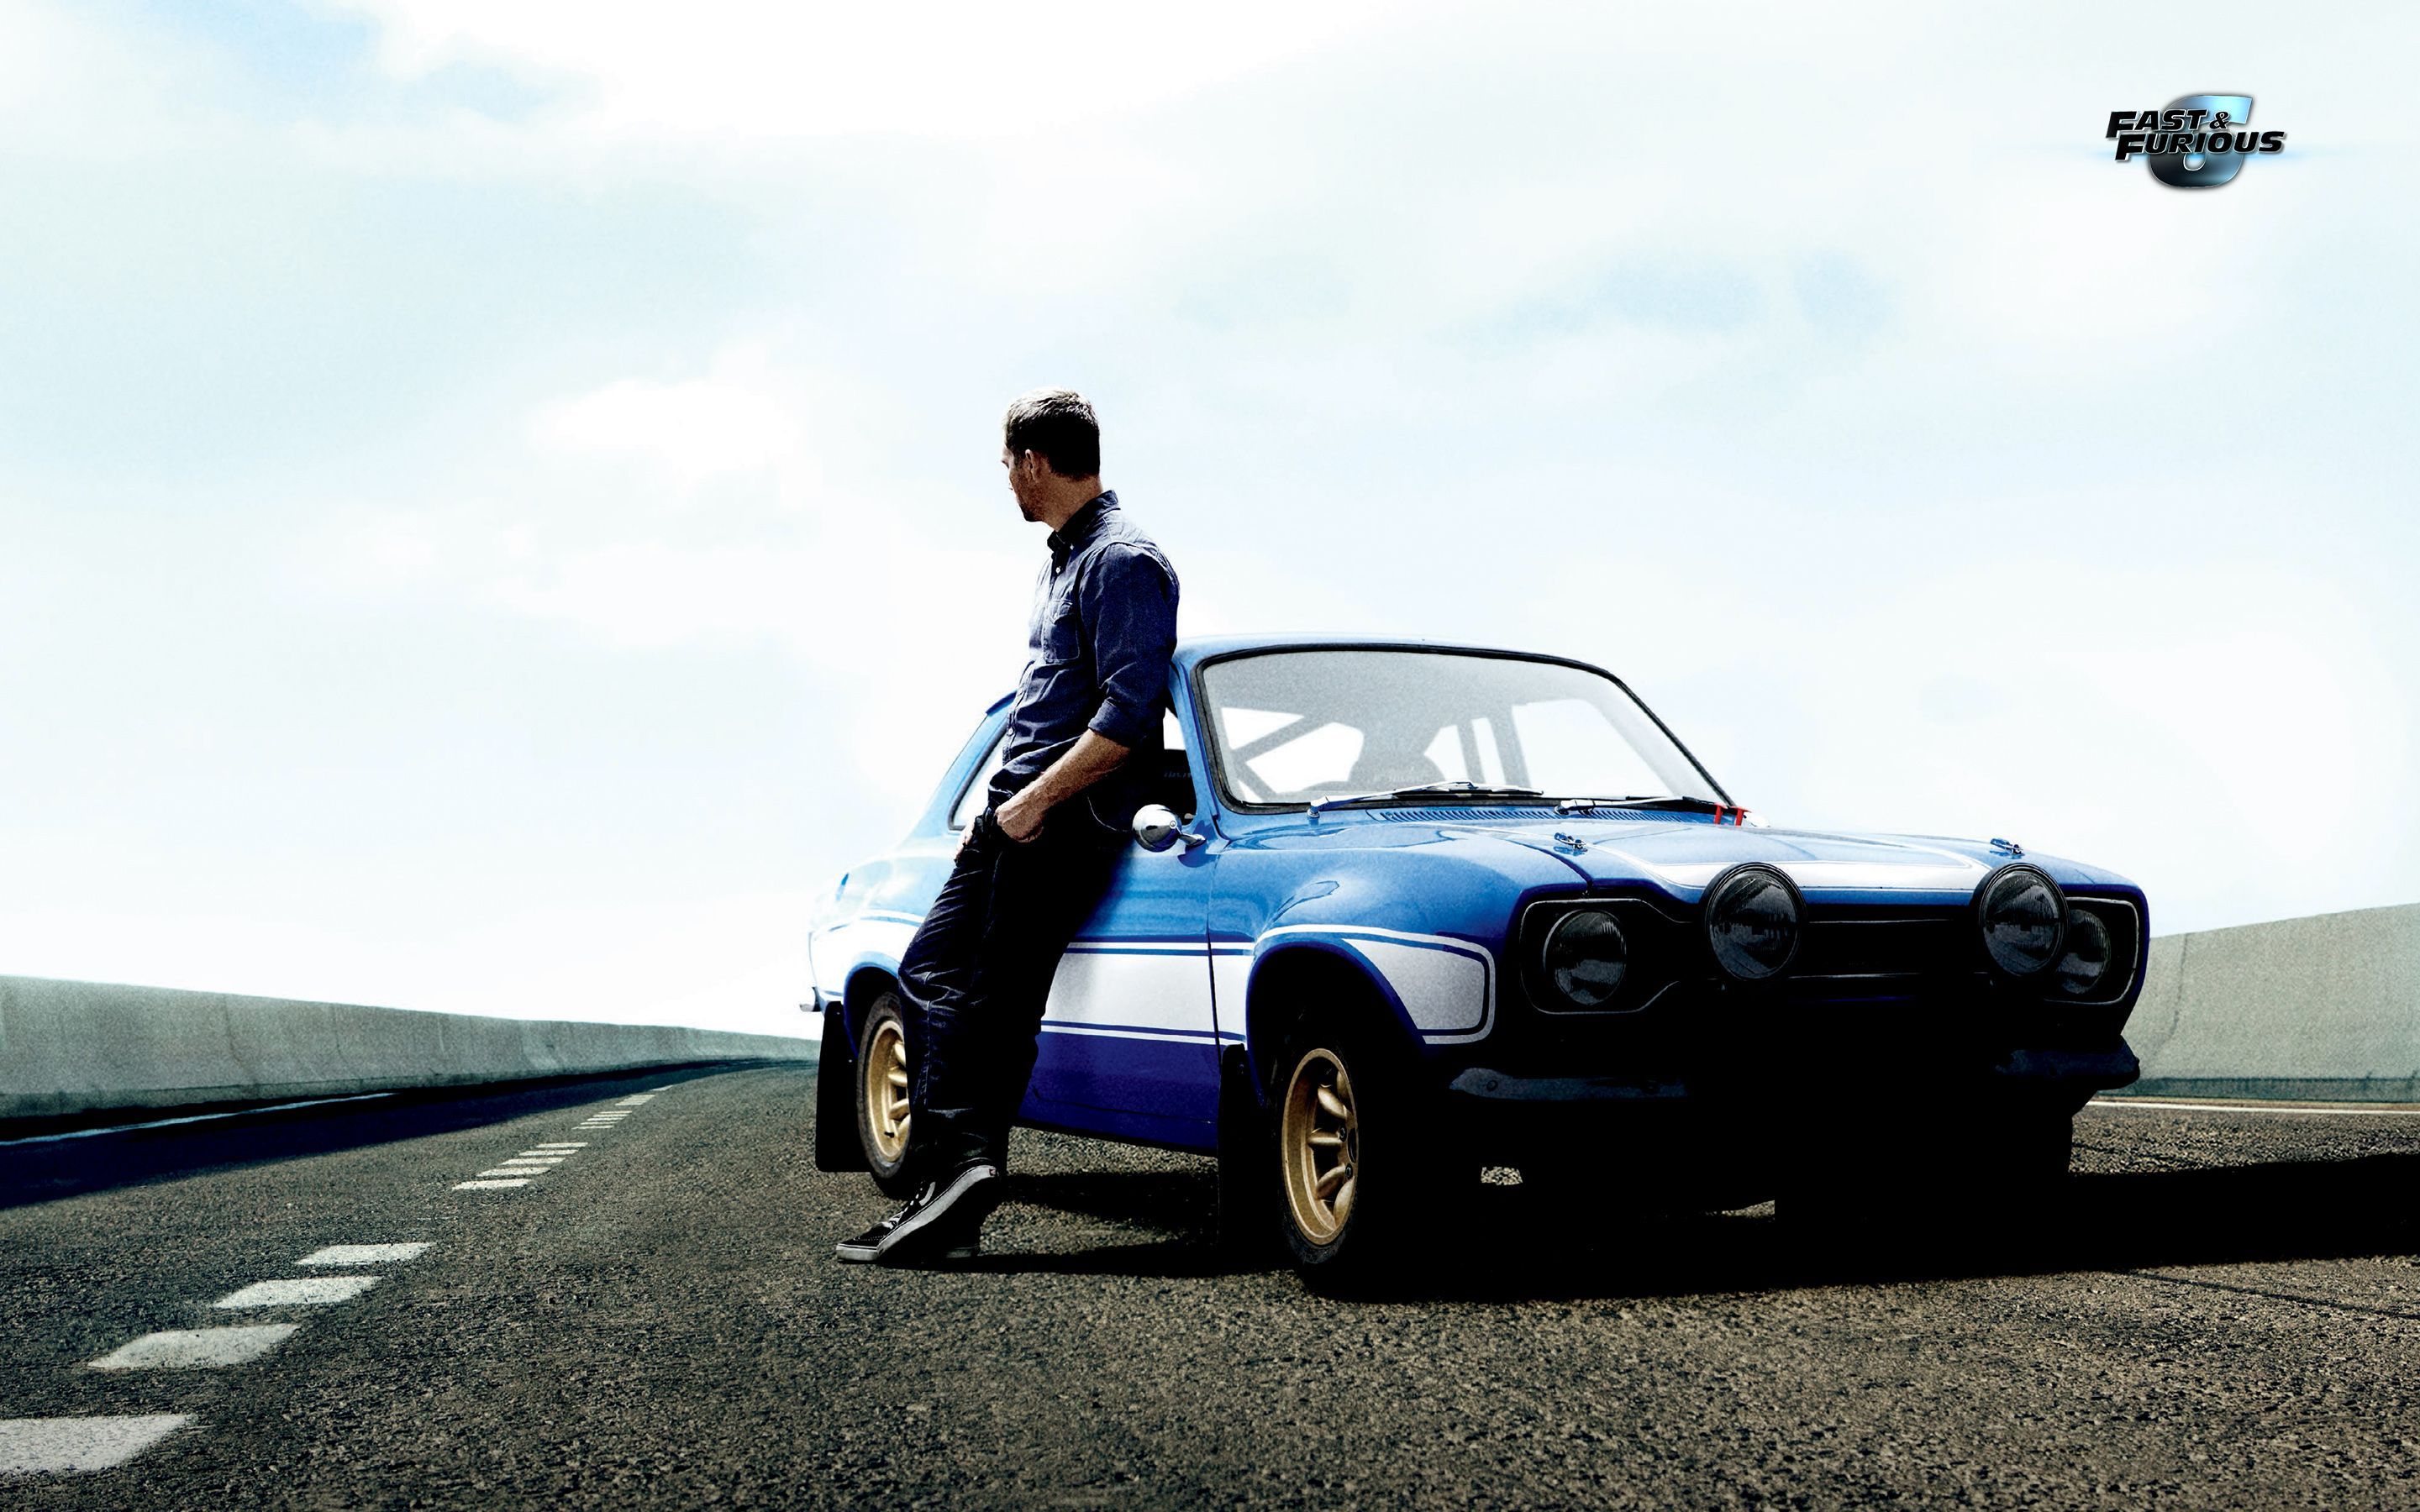 Paul Walker in Fast & Furious 6 Wallpapers HD Backgrounds